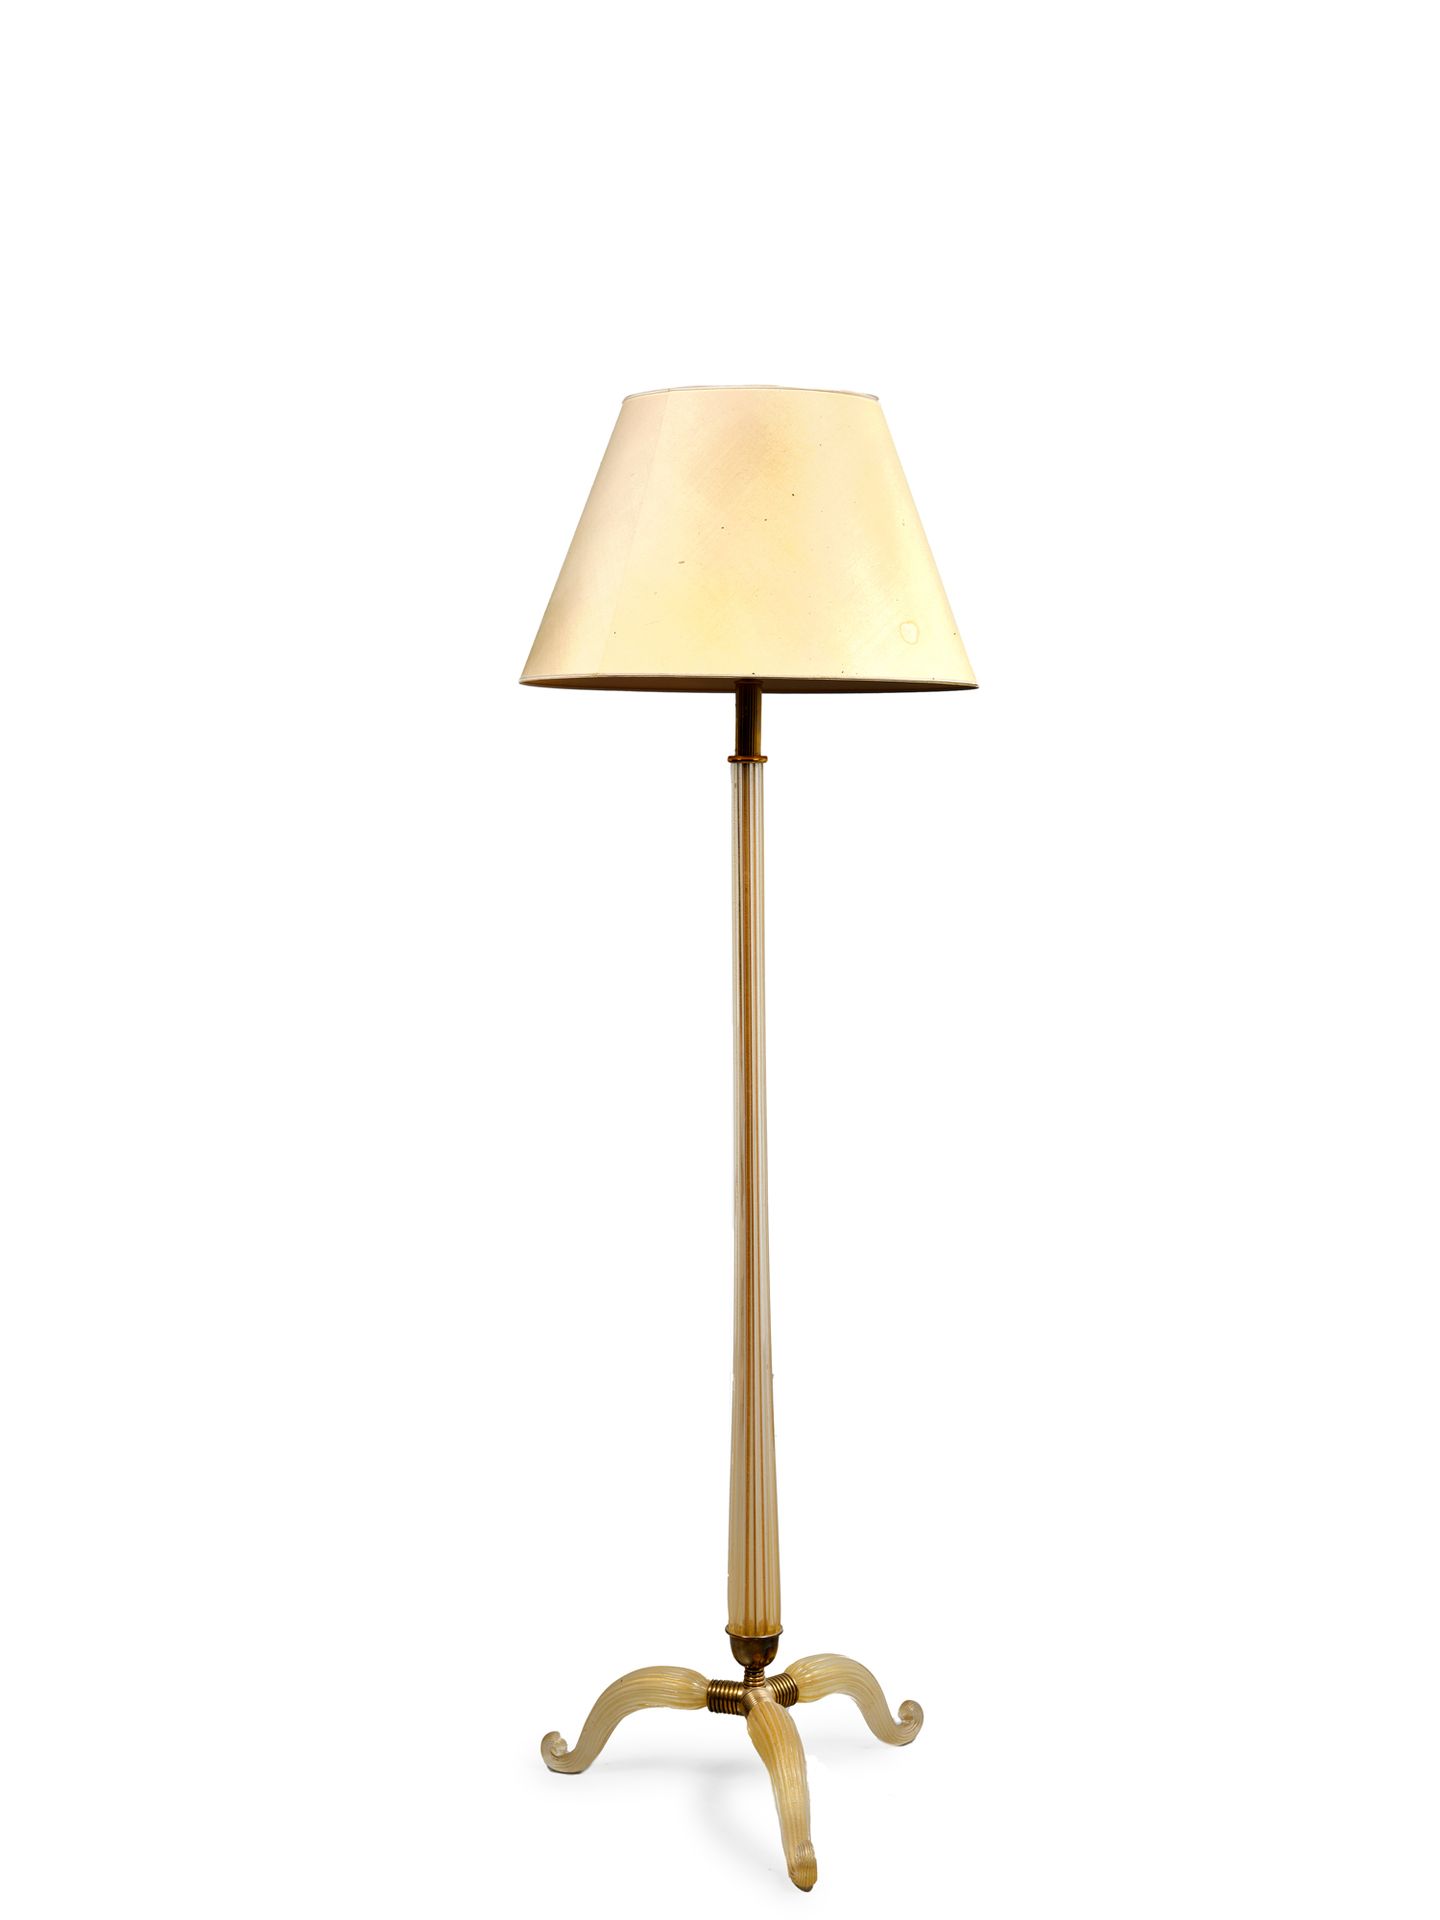 MAISON VERONESE 吹制玻璃落地灯，内含金色薄片，圆锥形凹槽灯轴安放在卷曲的三脚架底座上。
约 1950-1960 年
高度：170 厘米